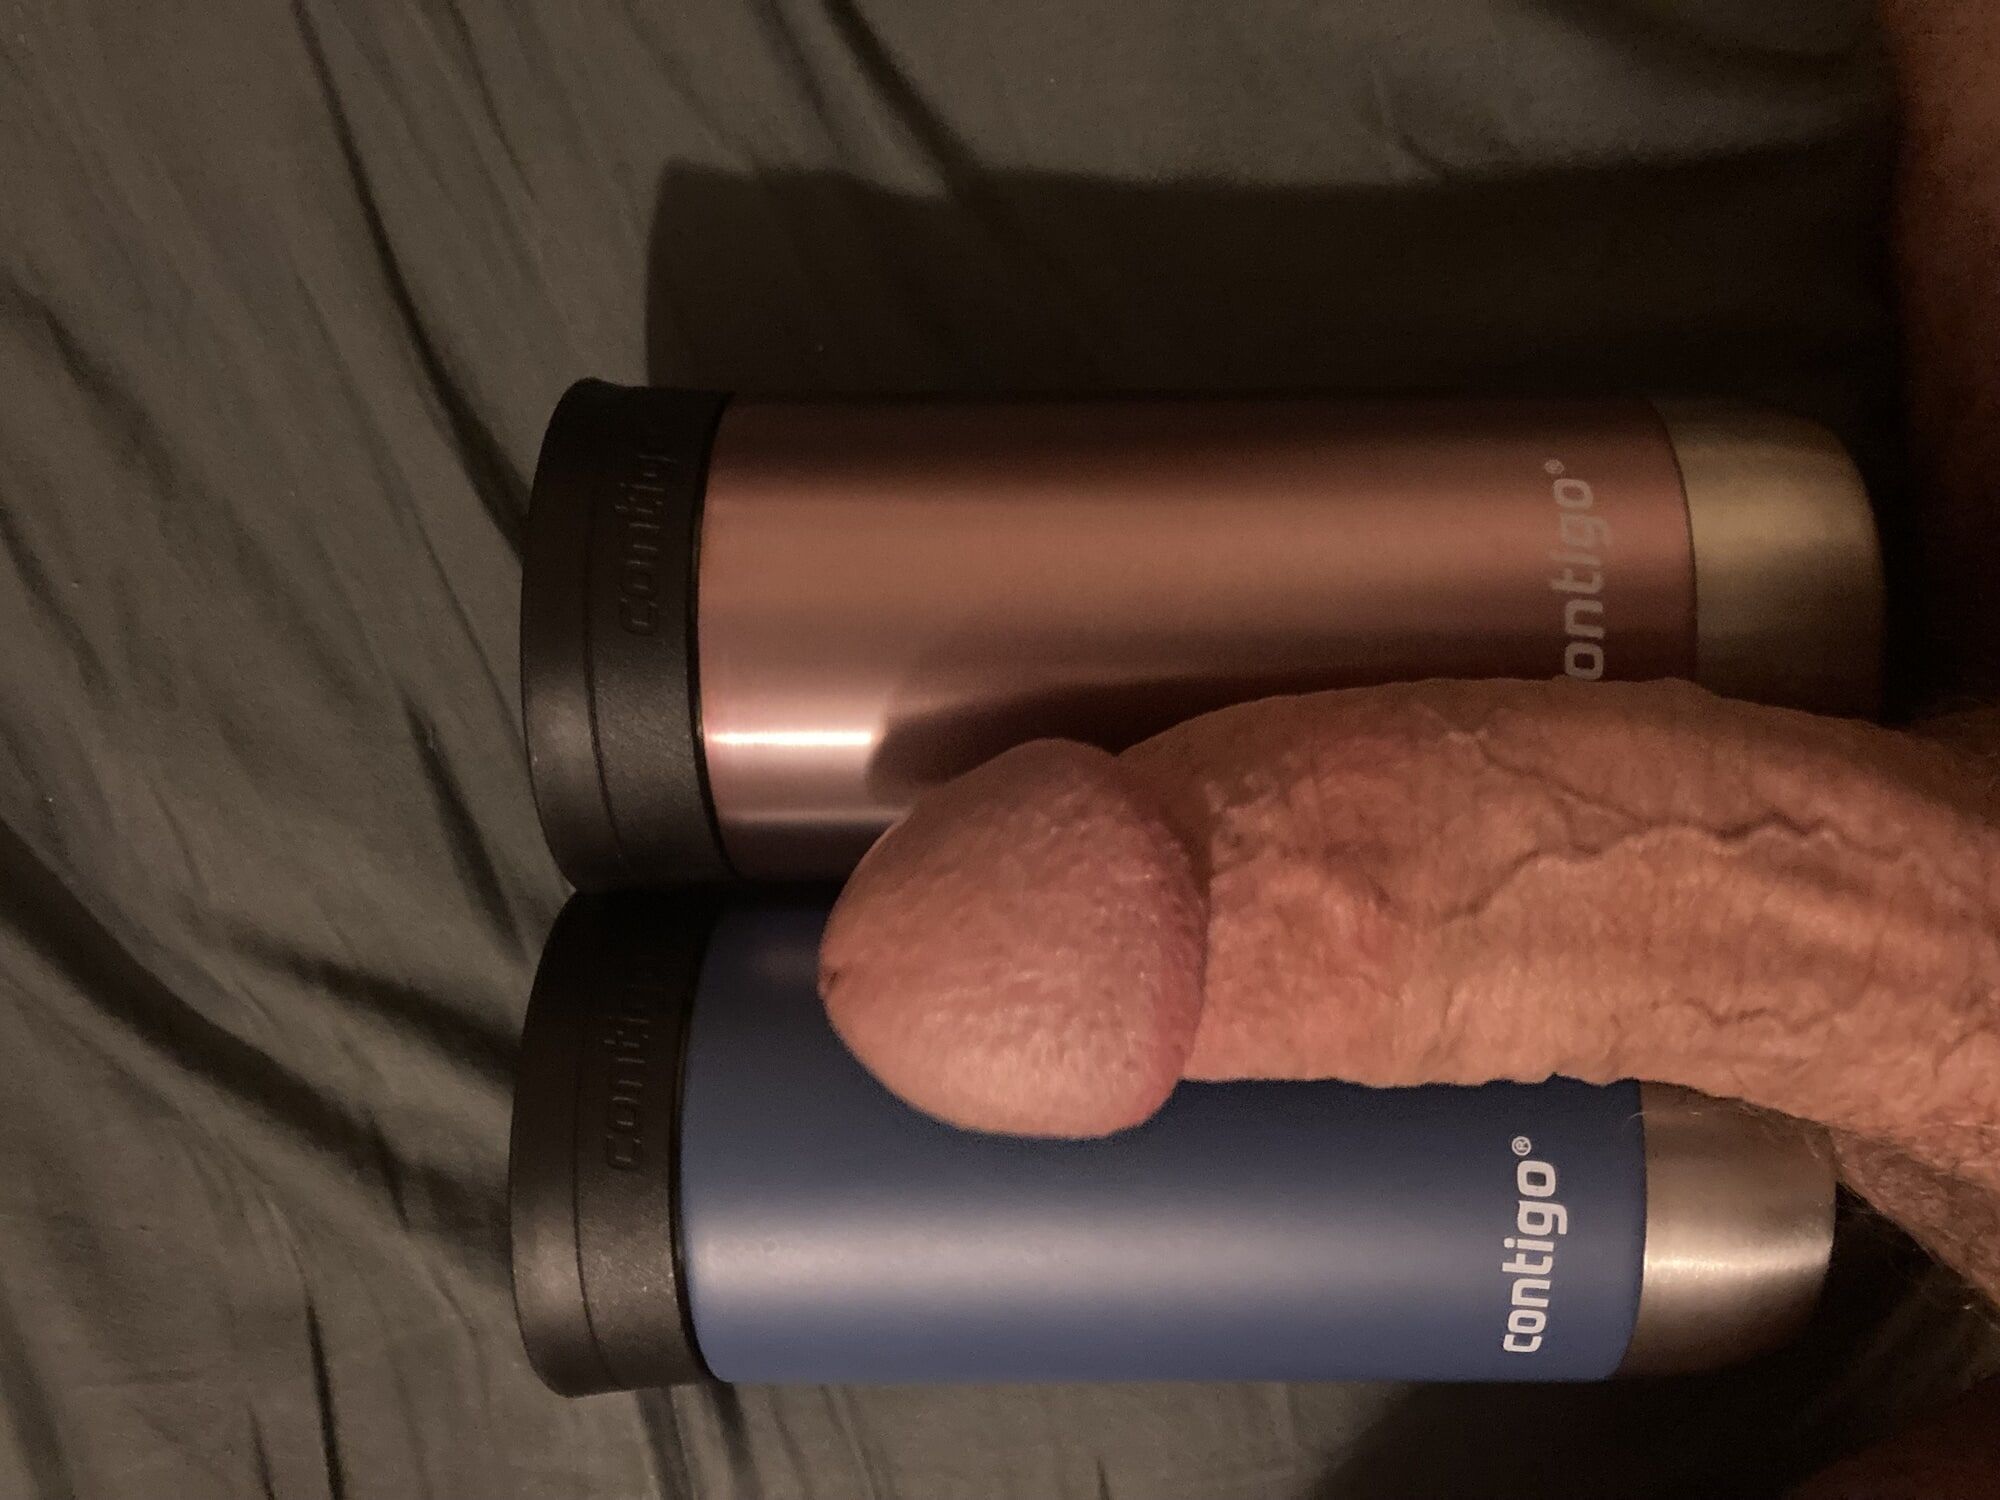 New mugs and hard dick to share